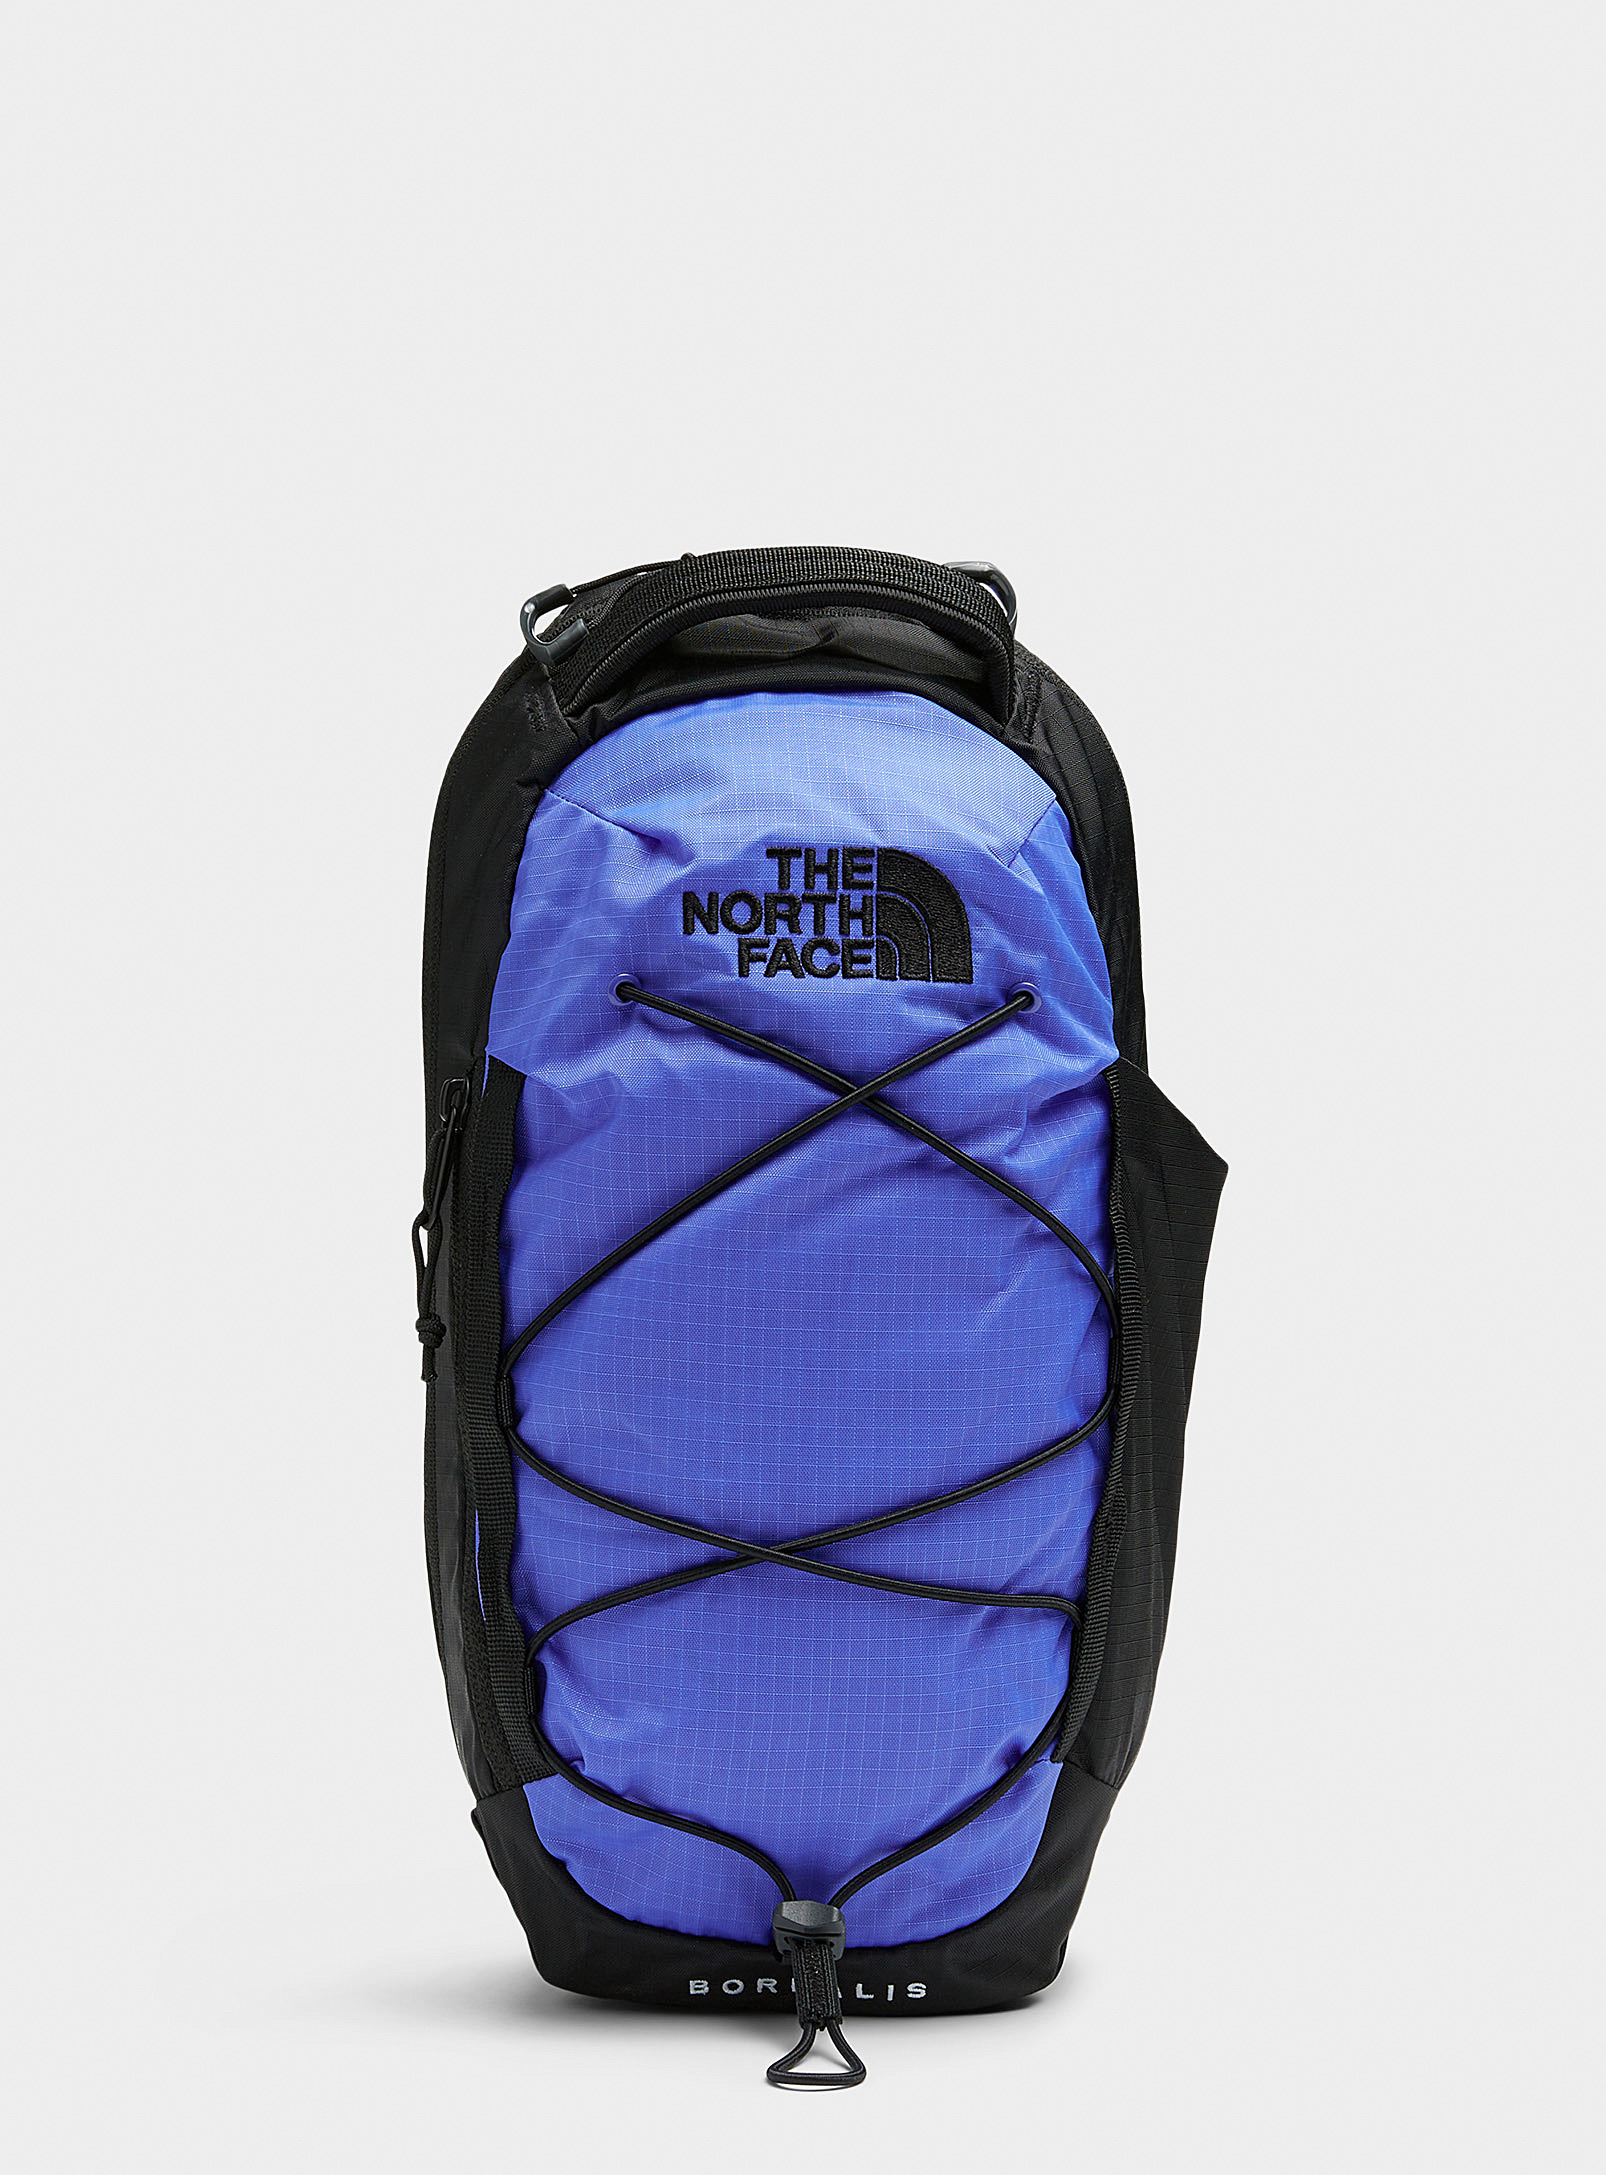 The North Face Borealis Shoulder Bag In Blue